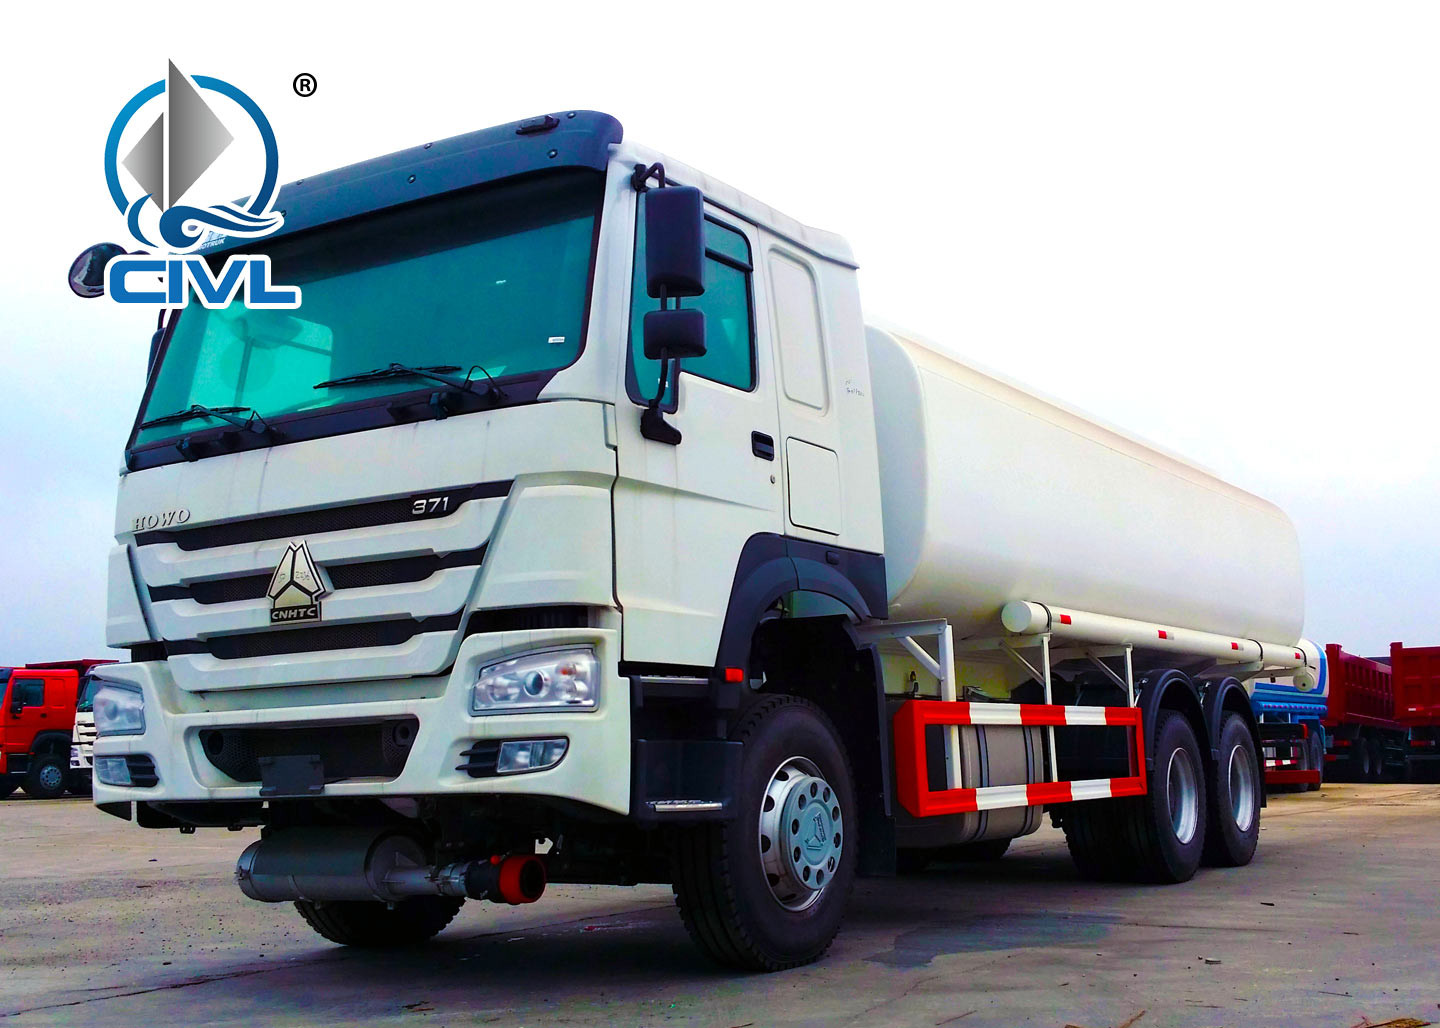 10 Wheels 6x4 20m3 Fuel Liquid Tanker Truck , Oil Tanker Lorry Color Customization Oil Tanker Vehicle